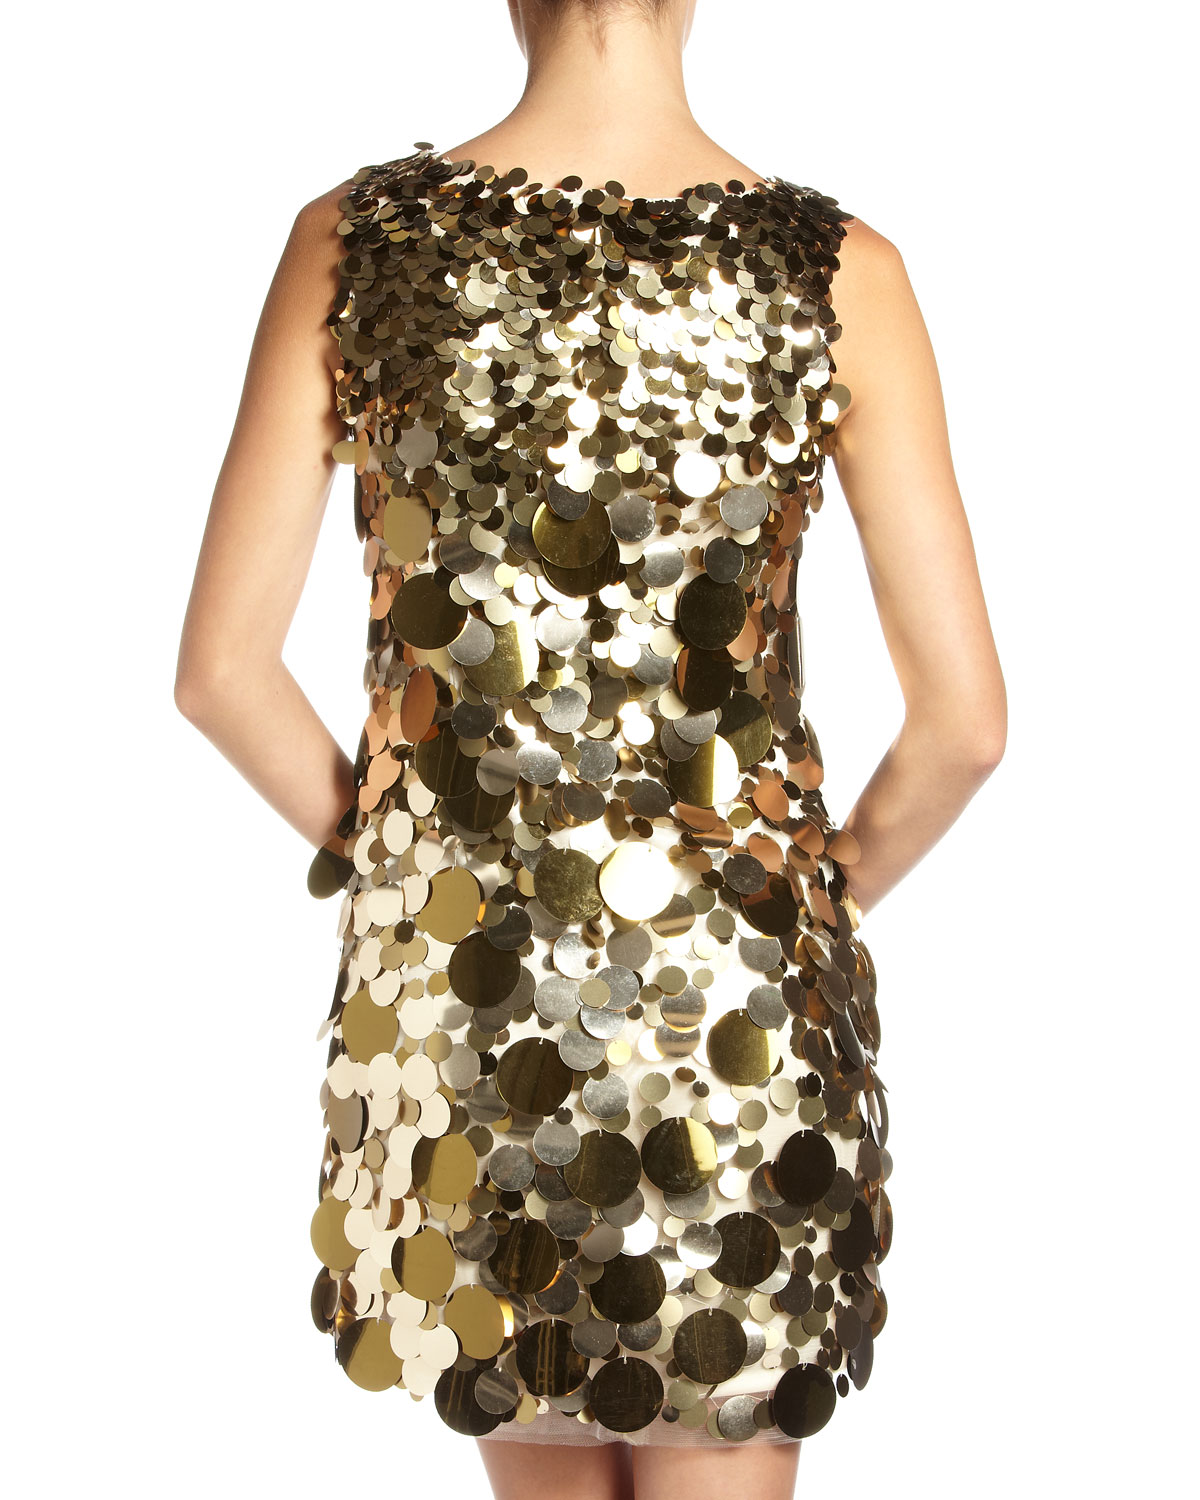 Lyst - Aidan mattox Paillette Short Dress in Metallic